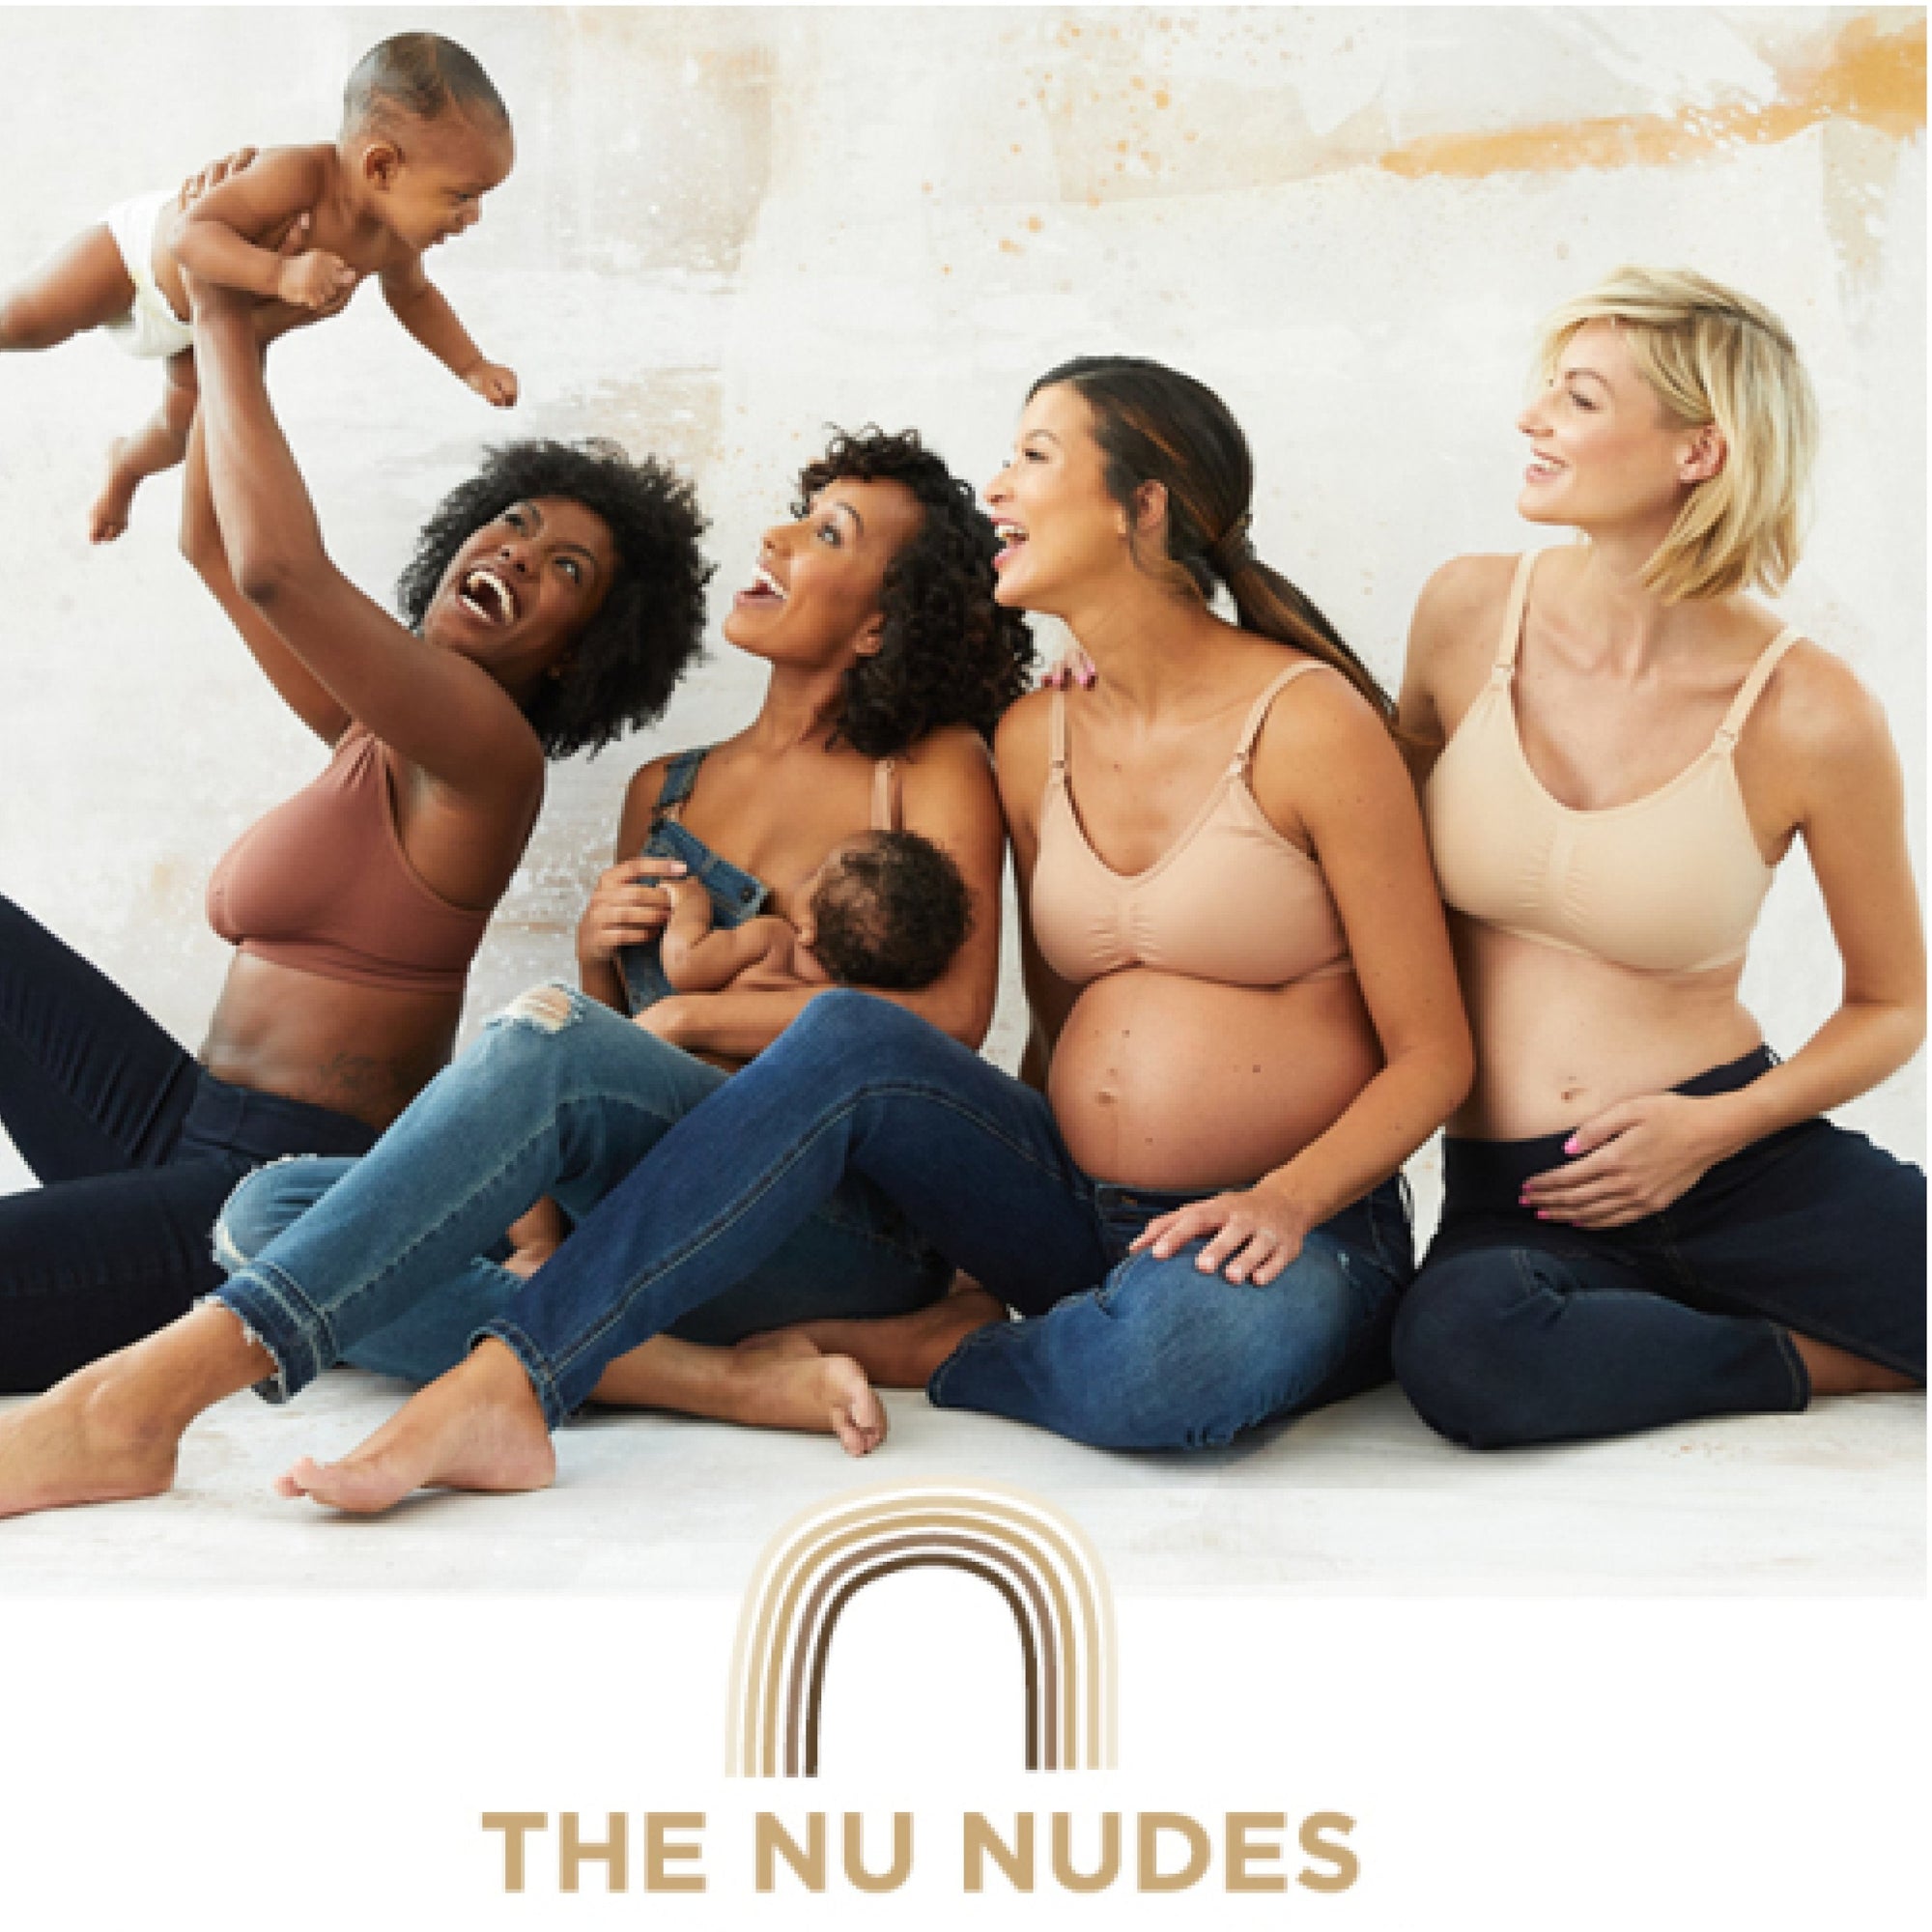 INTRODUCING THE “NU” NUDES